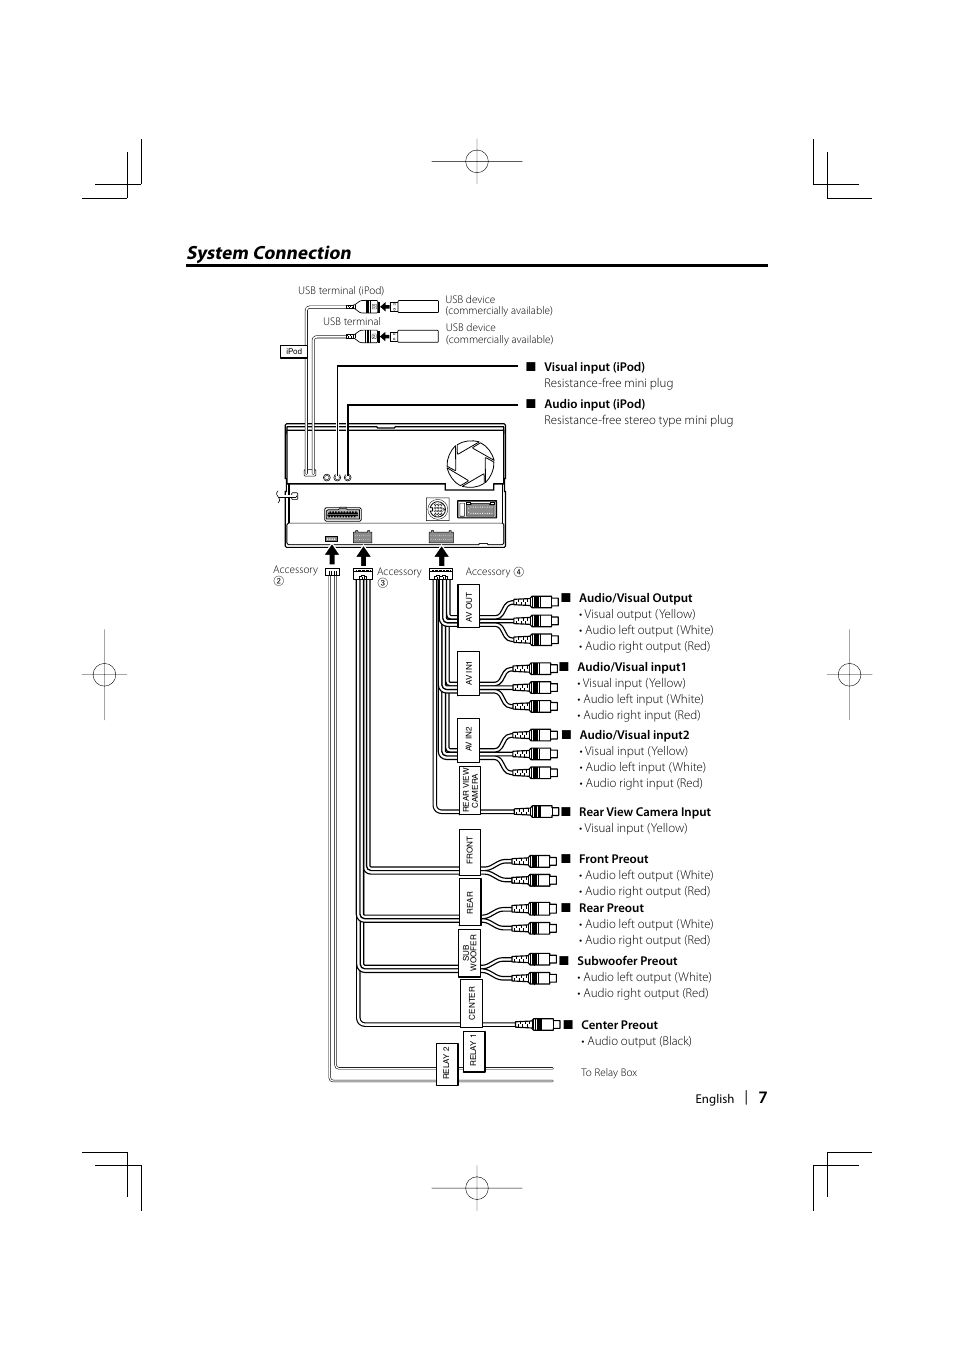 System connection | Kenwood DDX8022BT User Manual | Page 7 / 12